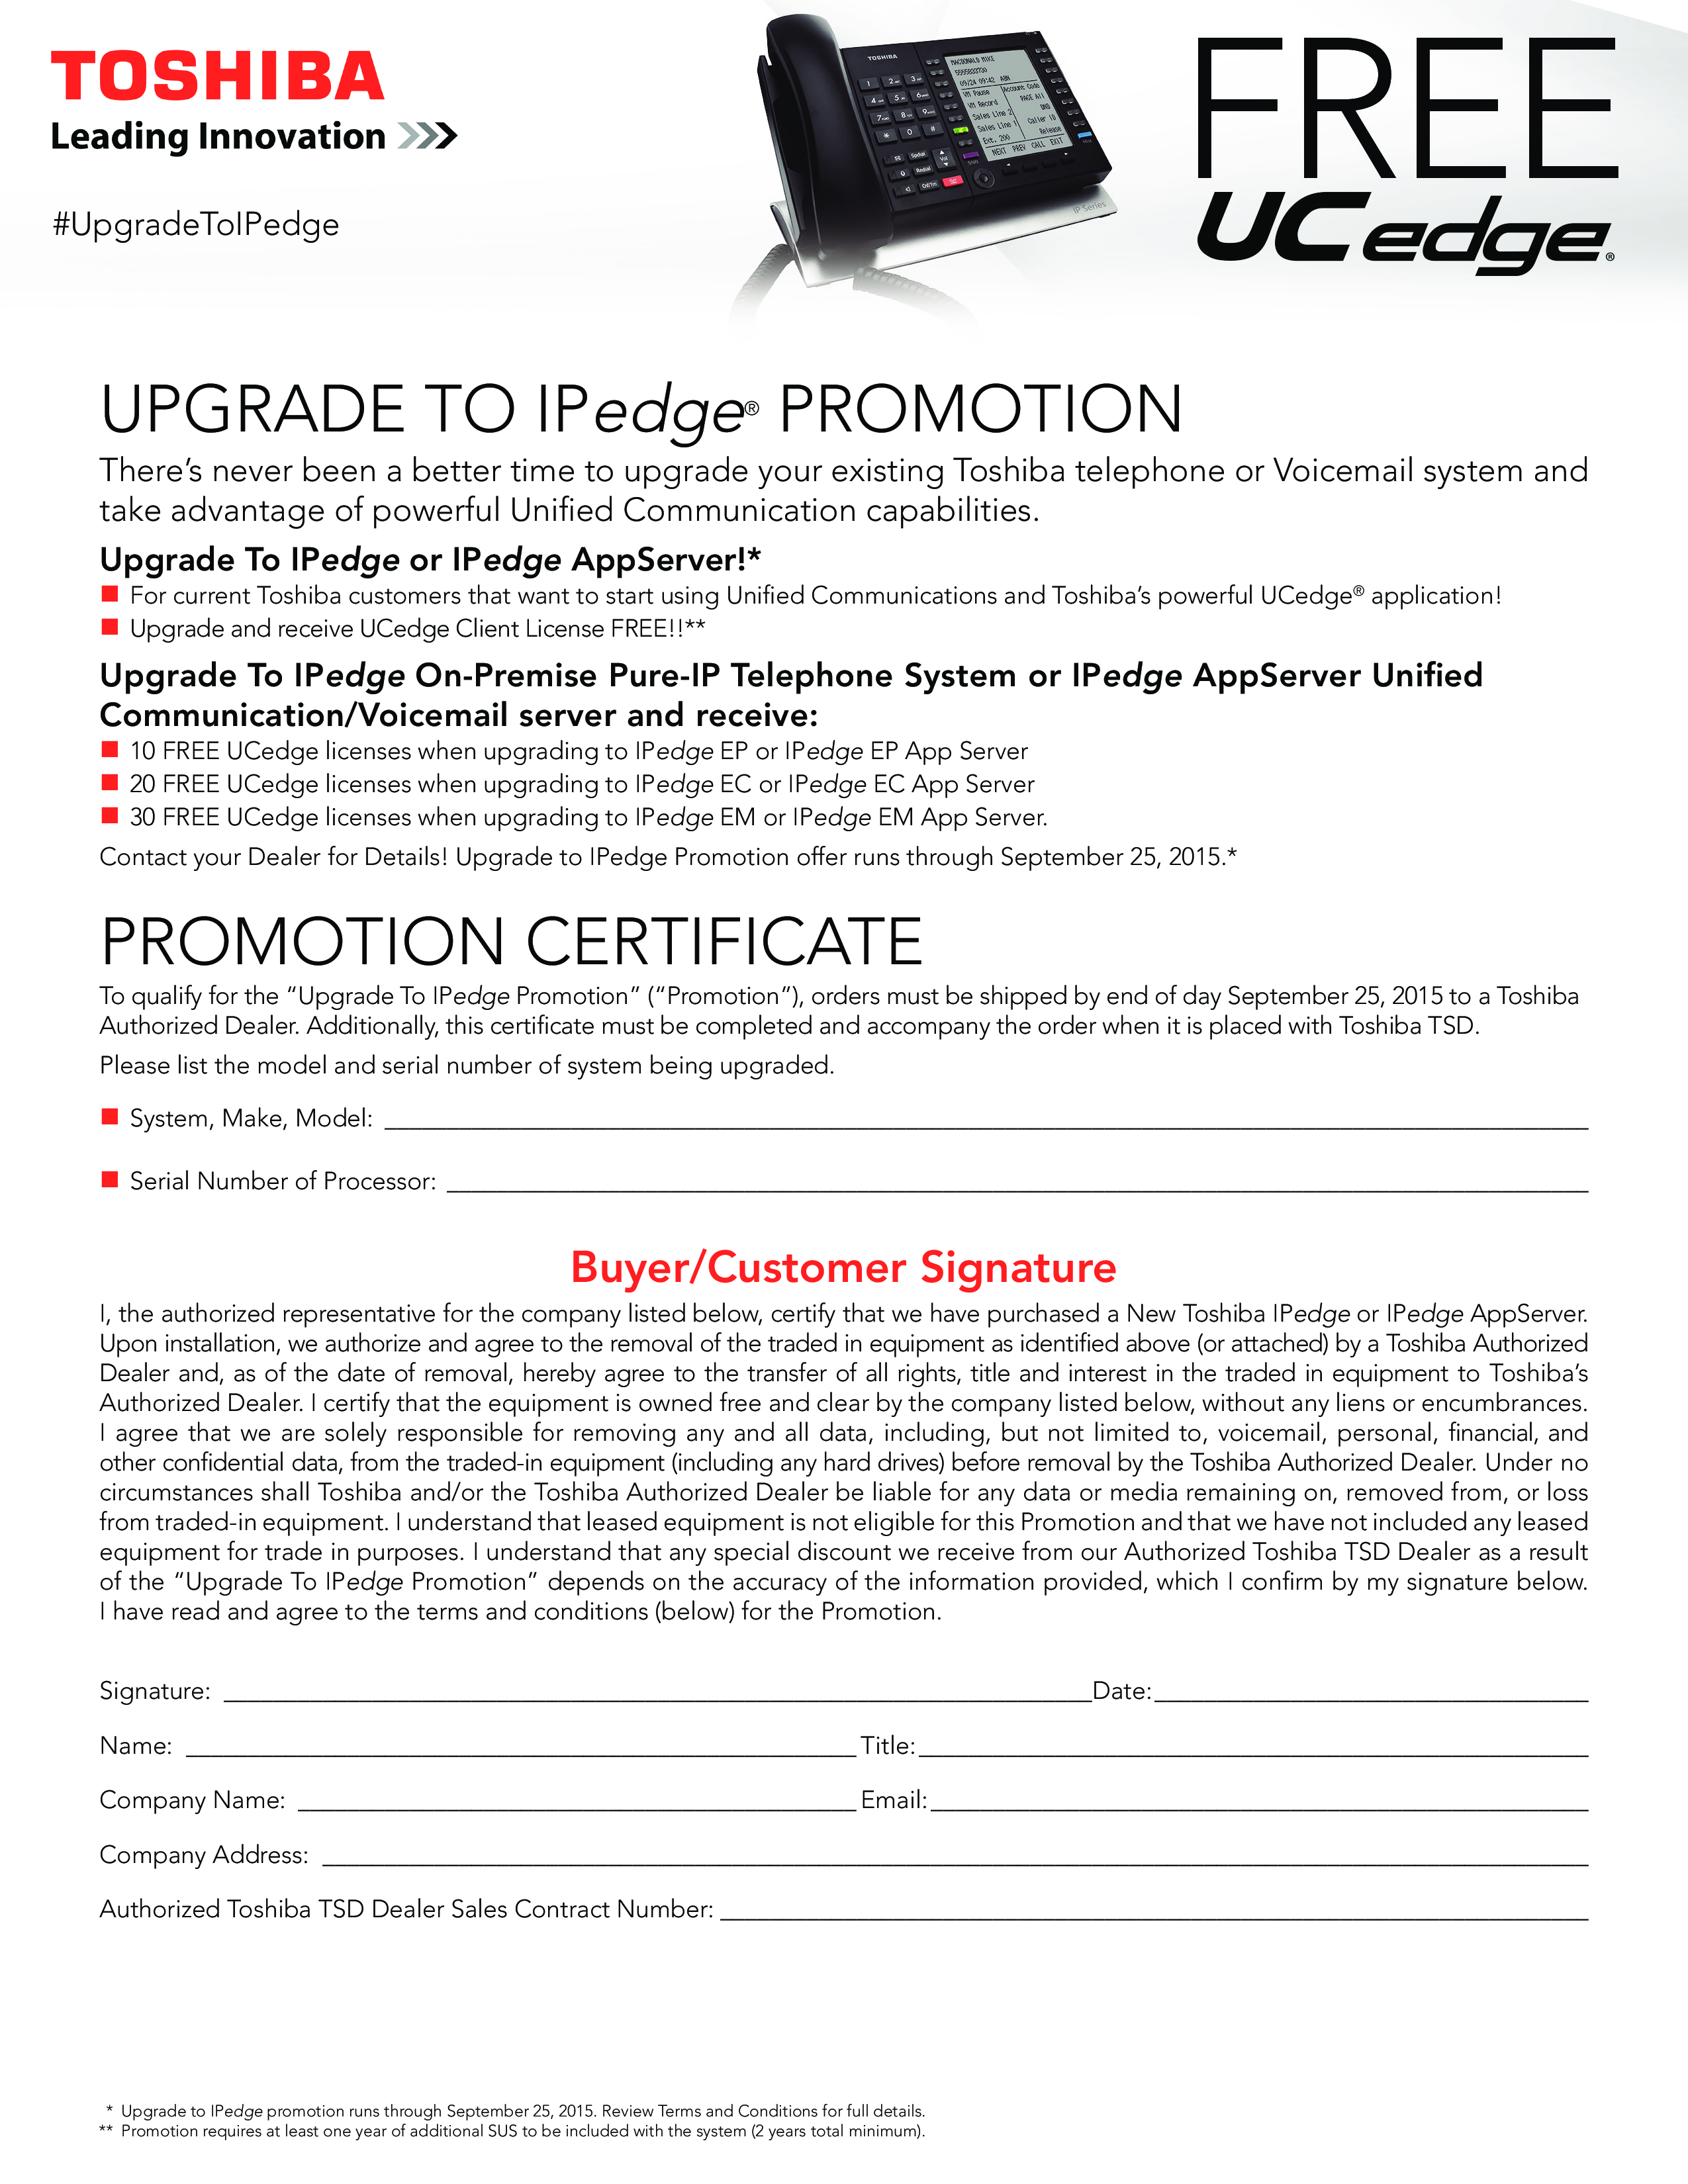 Kostenloses Upgrade To Ipedge Promotion Certificate With Promotion Certificate Template